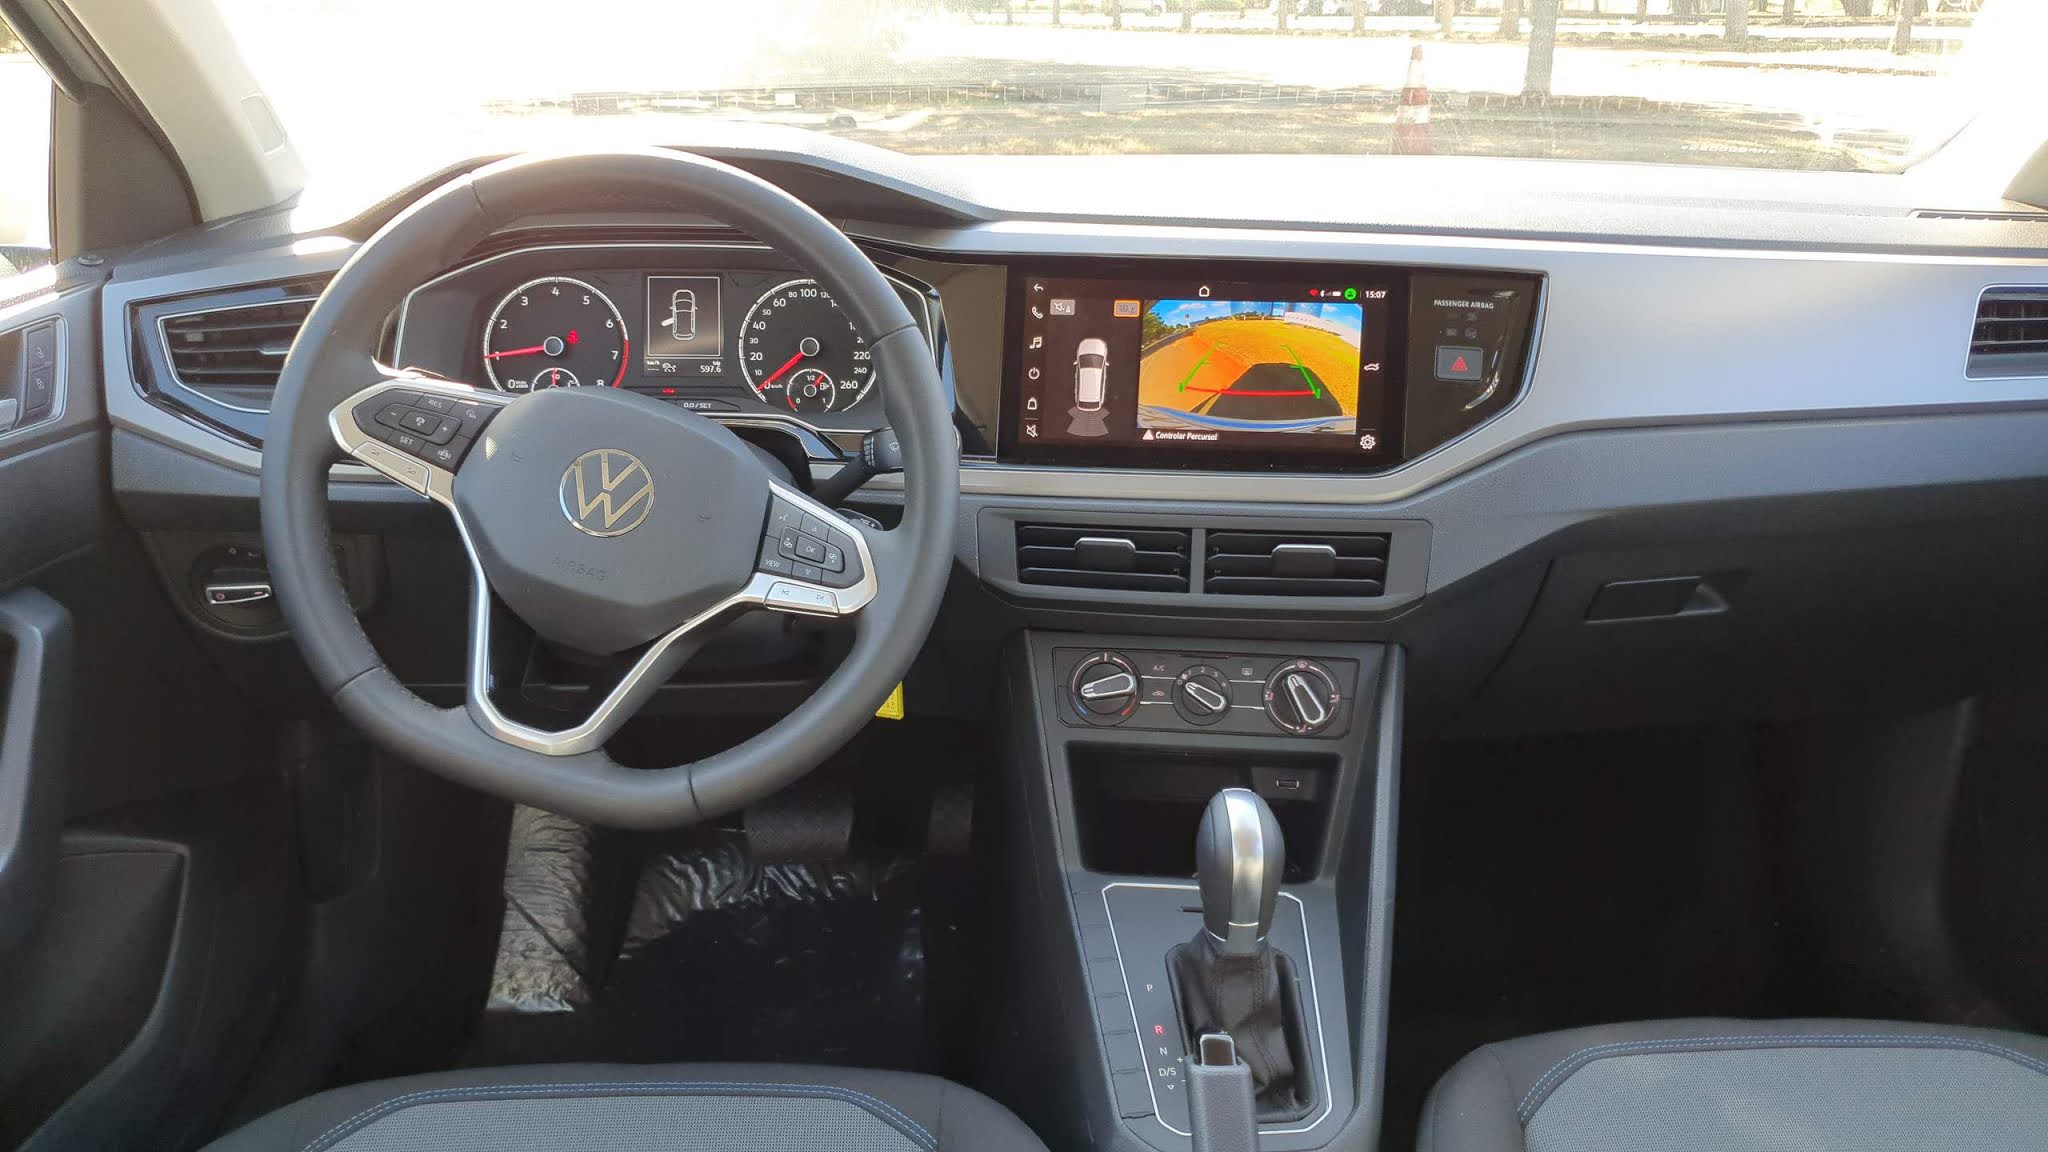 VW Polo 2022 Comfortline - interior